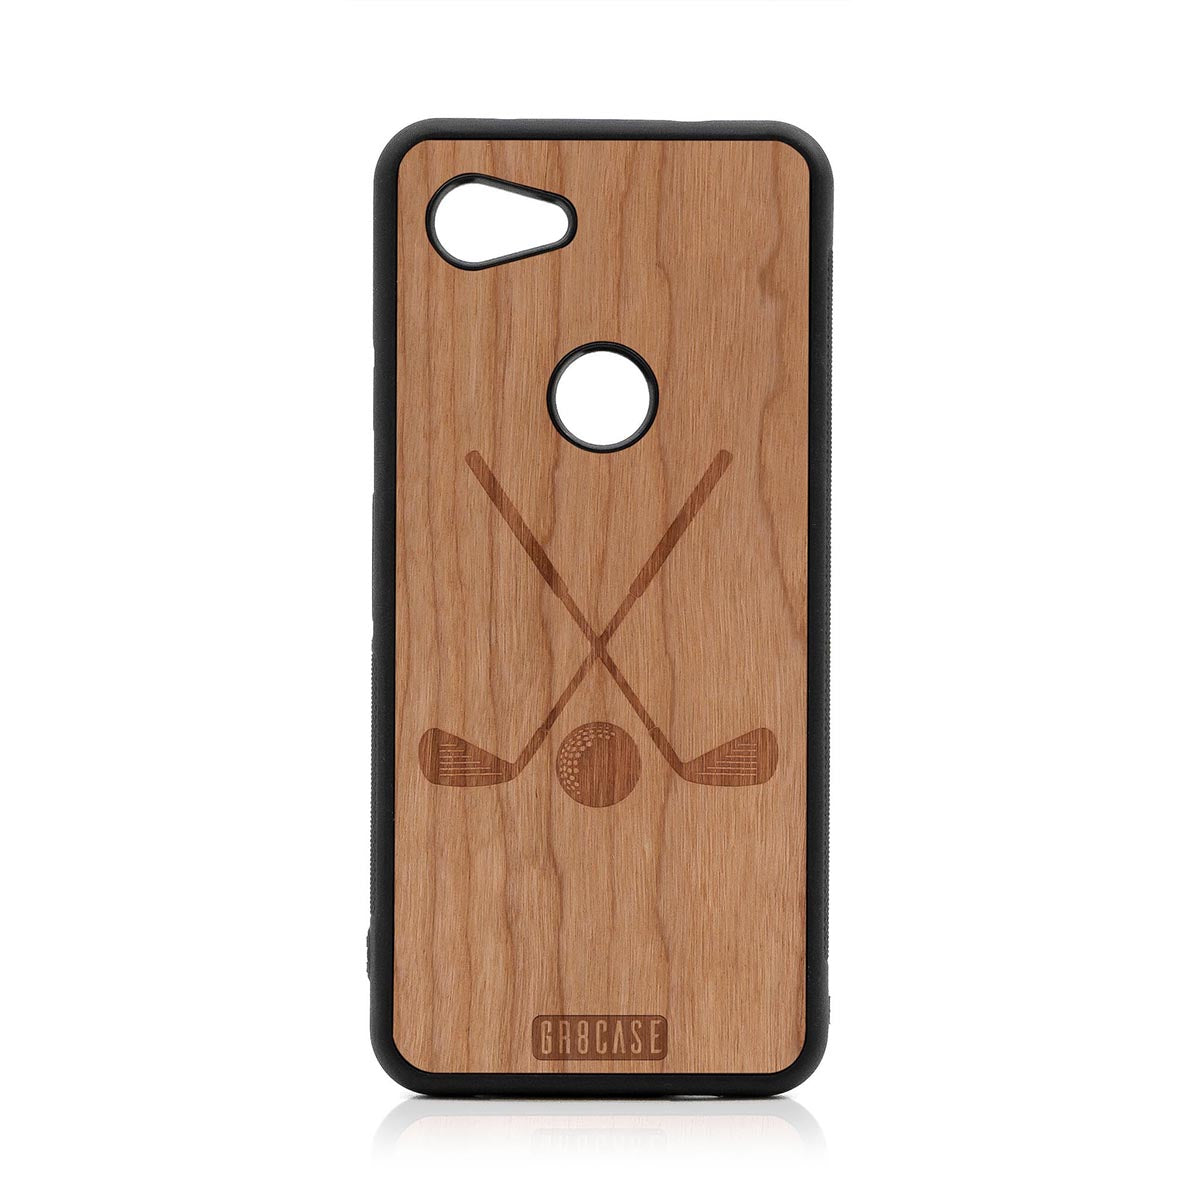 Golf Design Wood Case Google Pixel 3A XL by GR8CASE